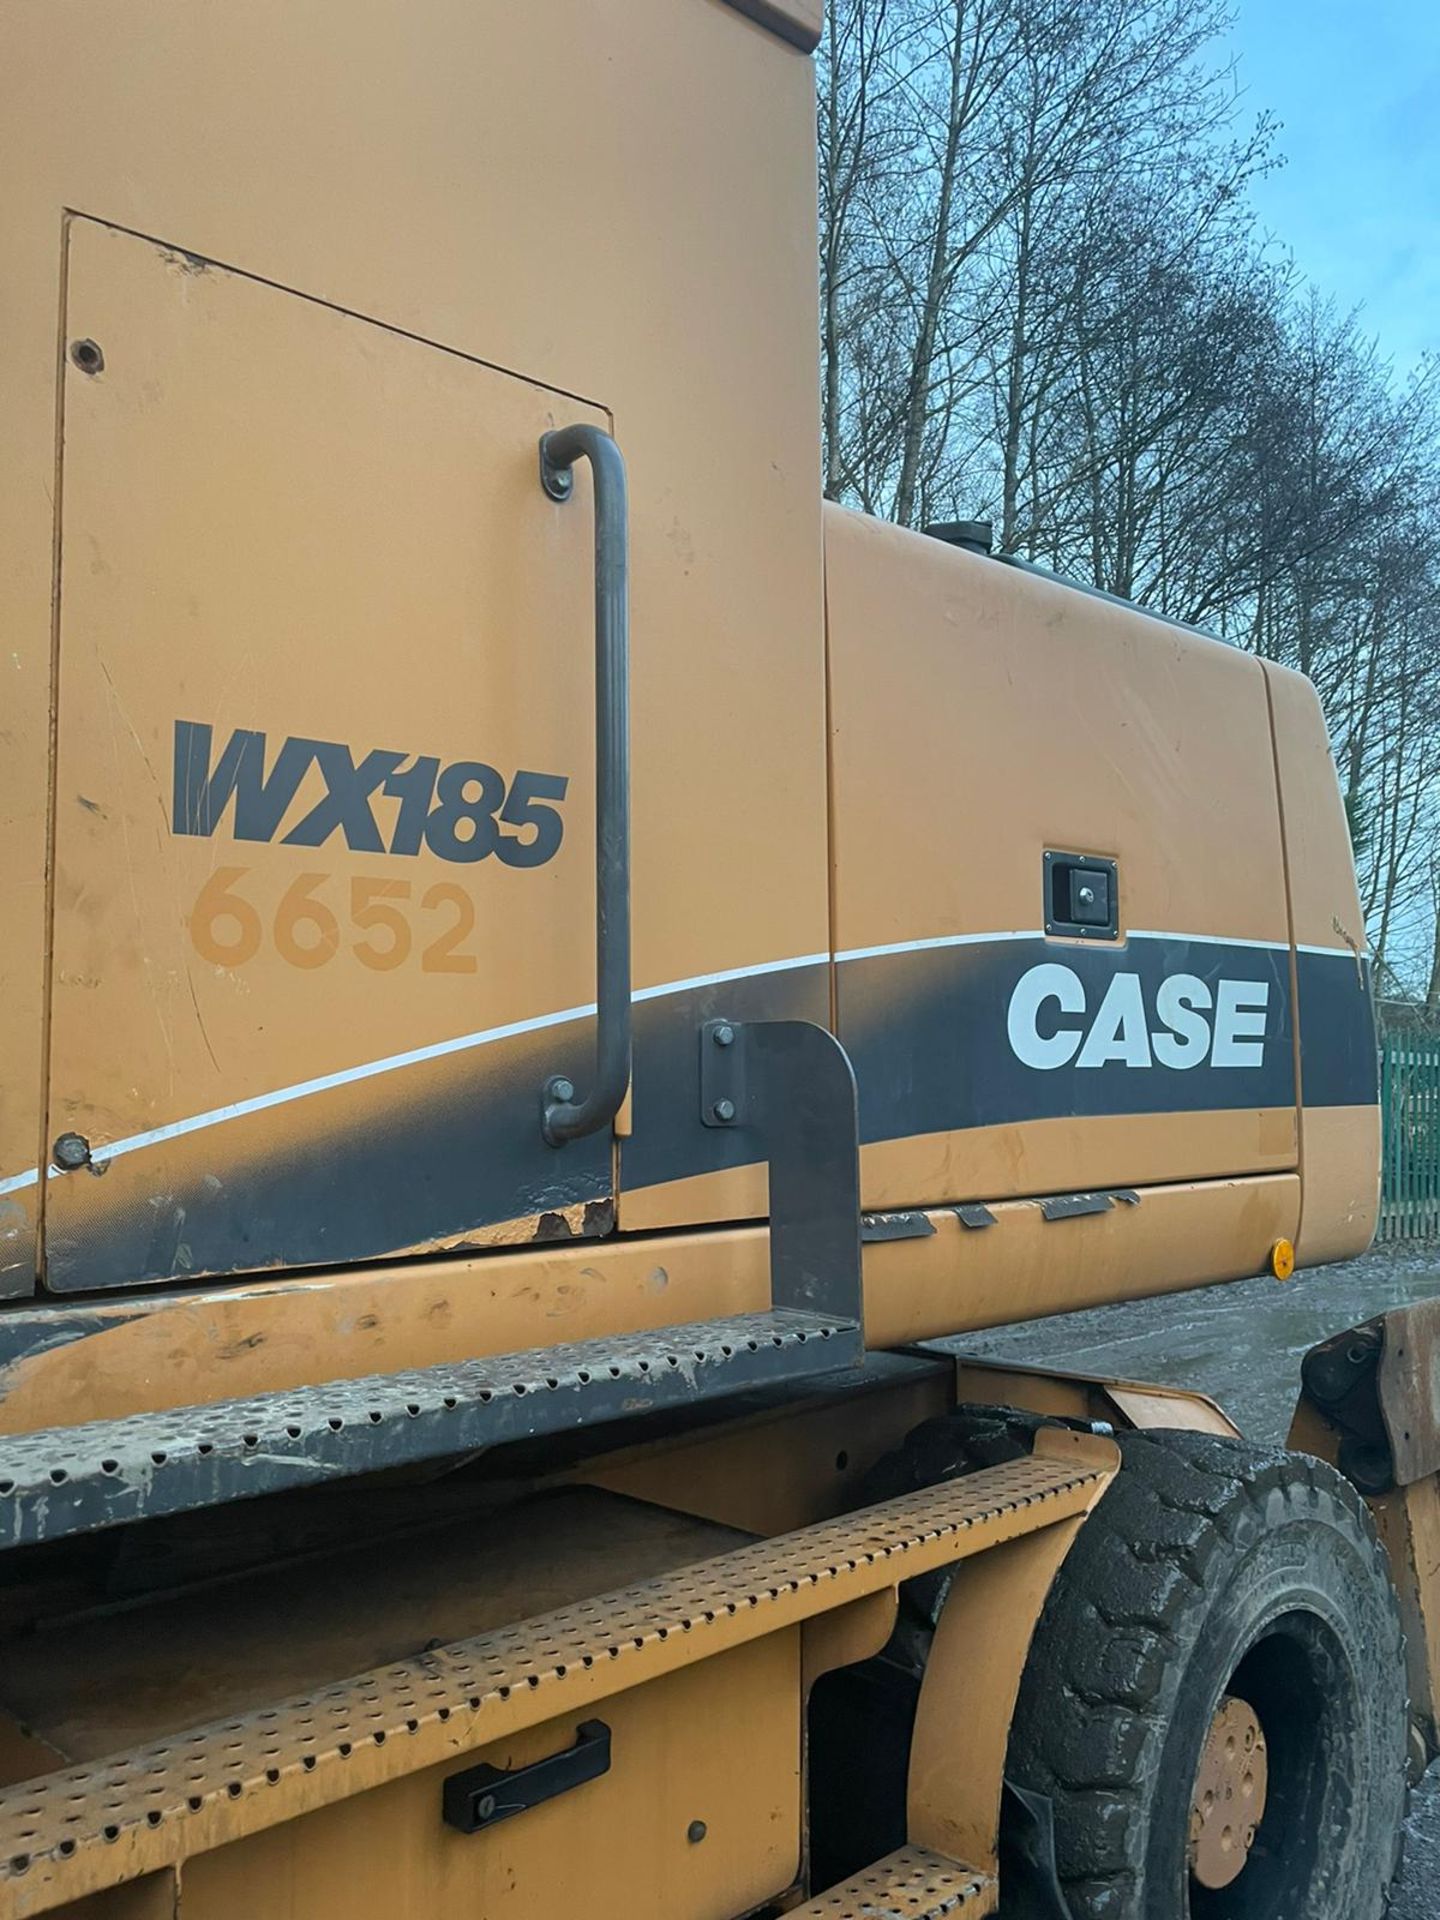 Case WX185 Wheeled digger. - Image 4 of 5